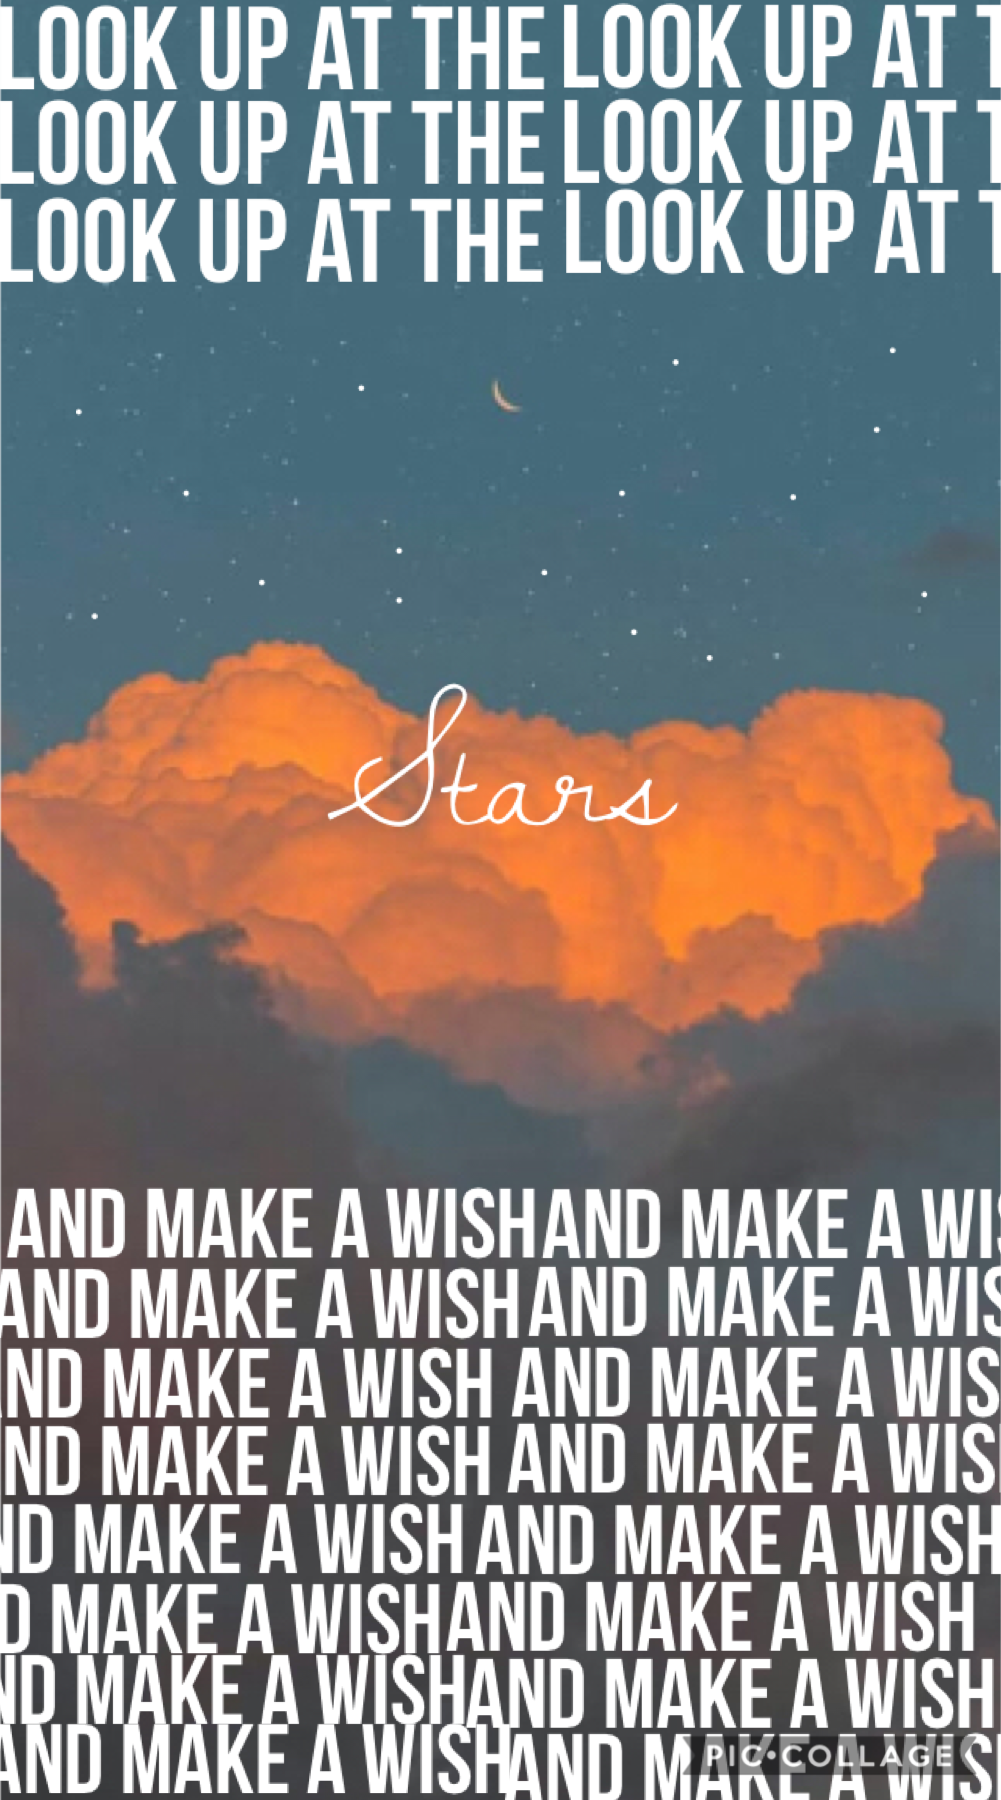 Look up at the stars and make a wish 🤩